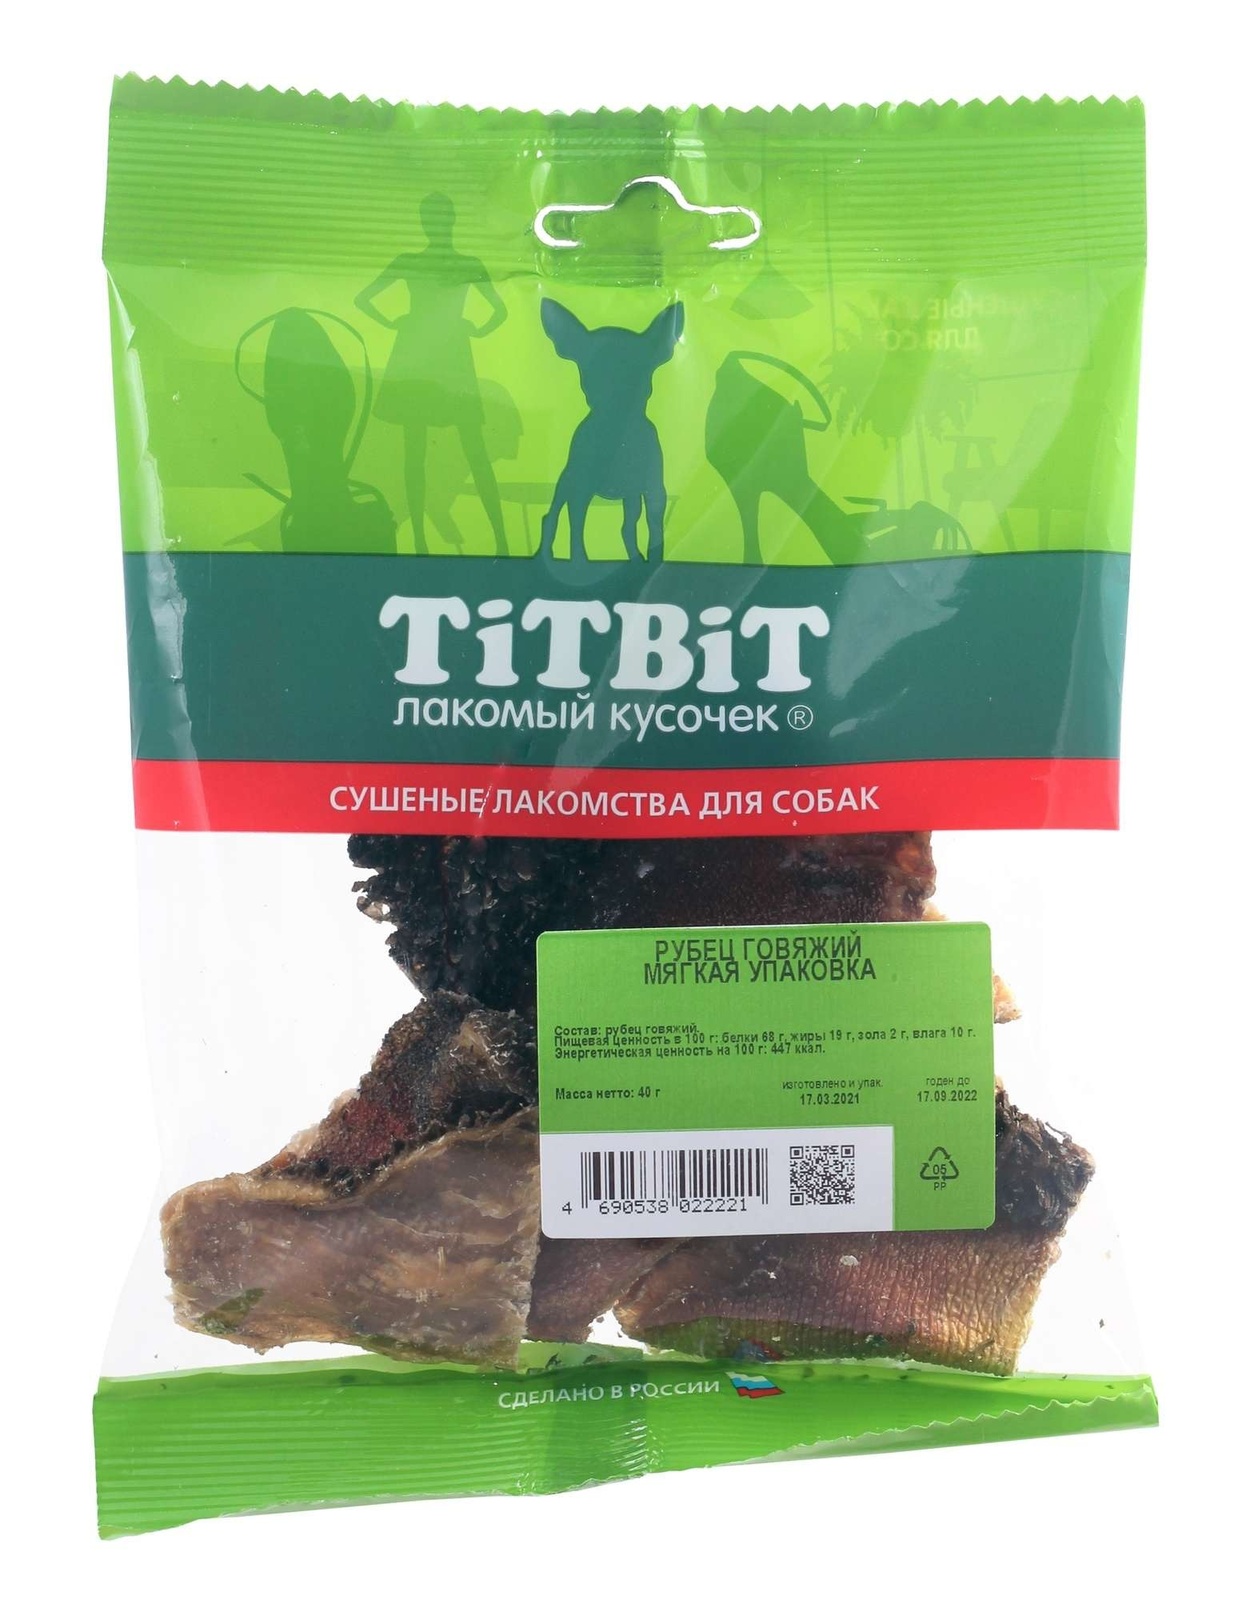 TiTBiT TiTBiT рубец говяжий - мягкая упаковка (40 г) titbit пищевод говяжий мягкая упаковка 48 г